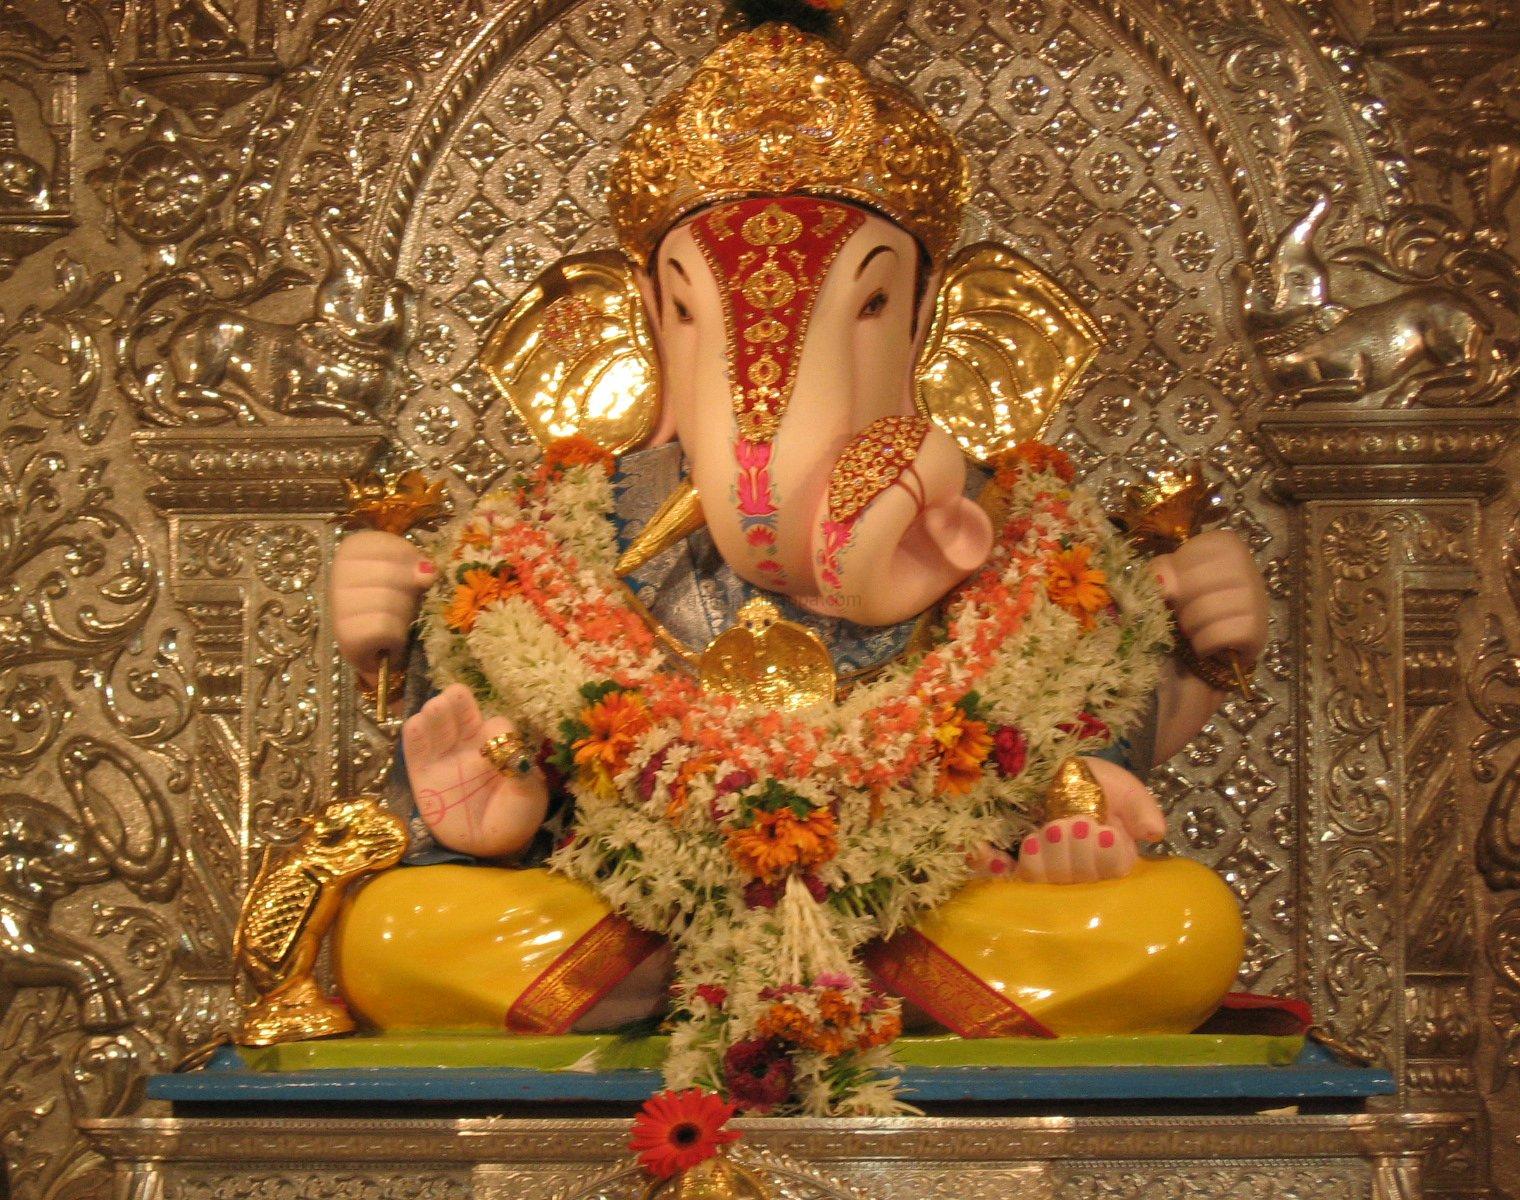 Ganesha Images - Ganpati Bappa HD Wallpapers, Pictures, Photos